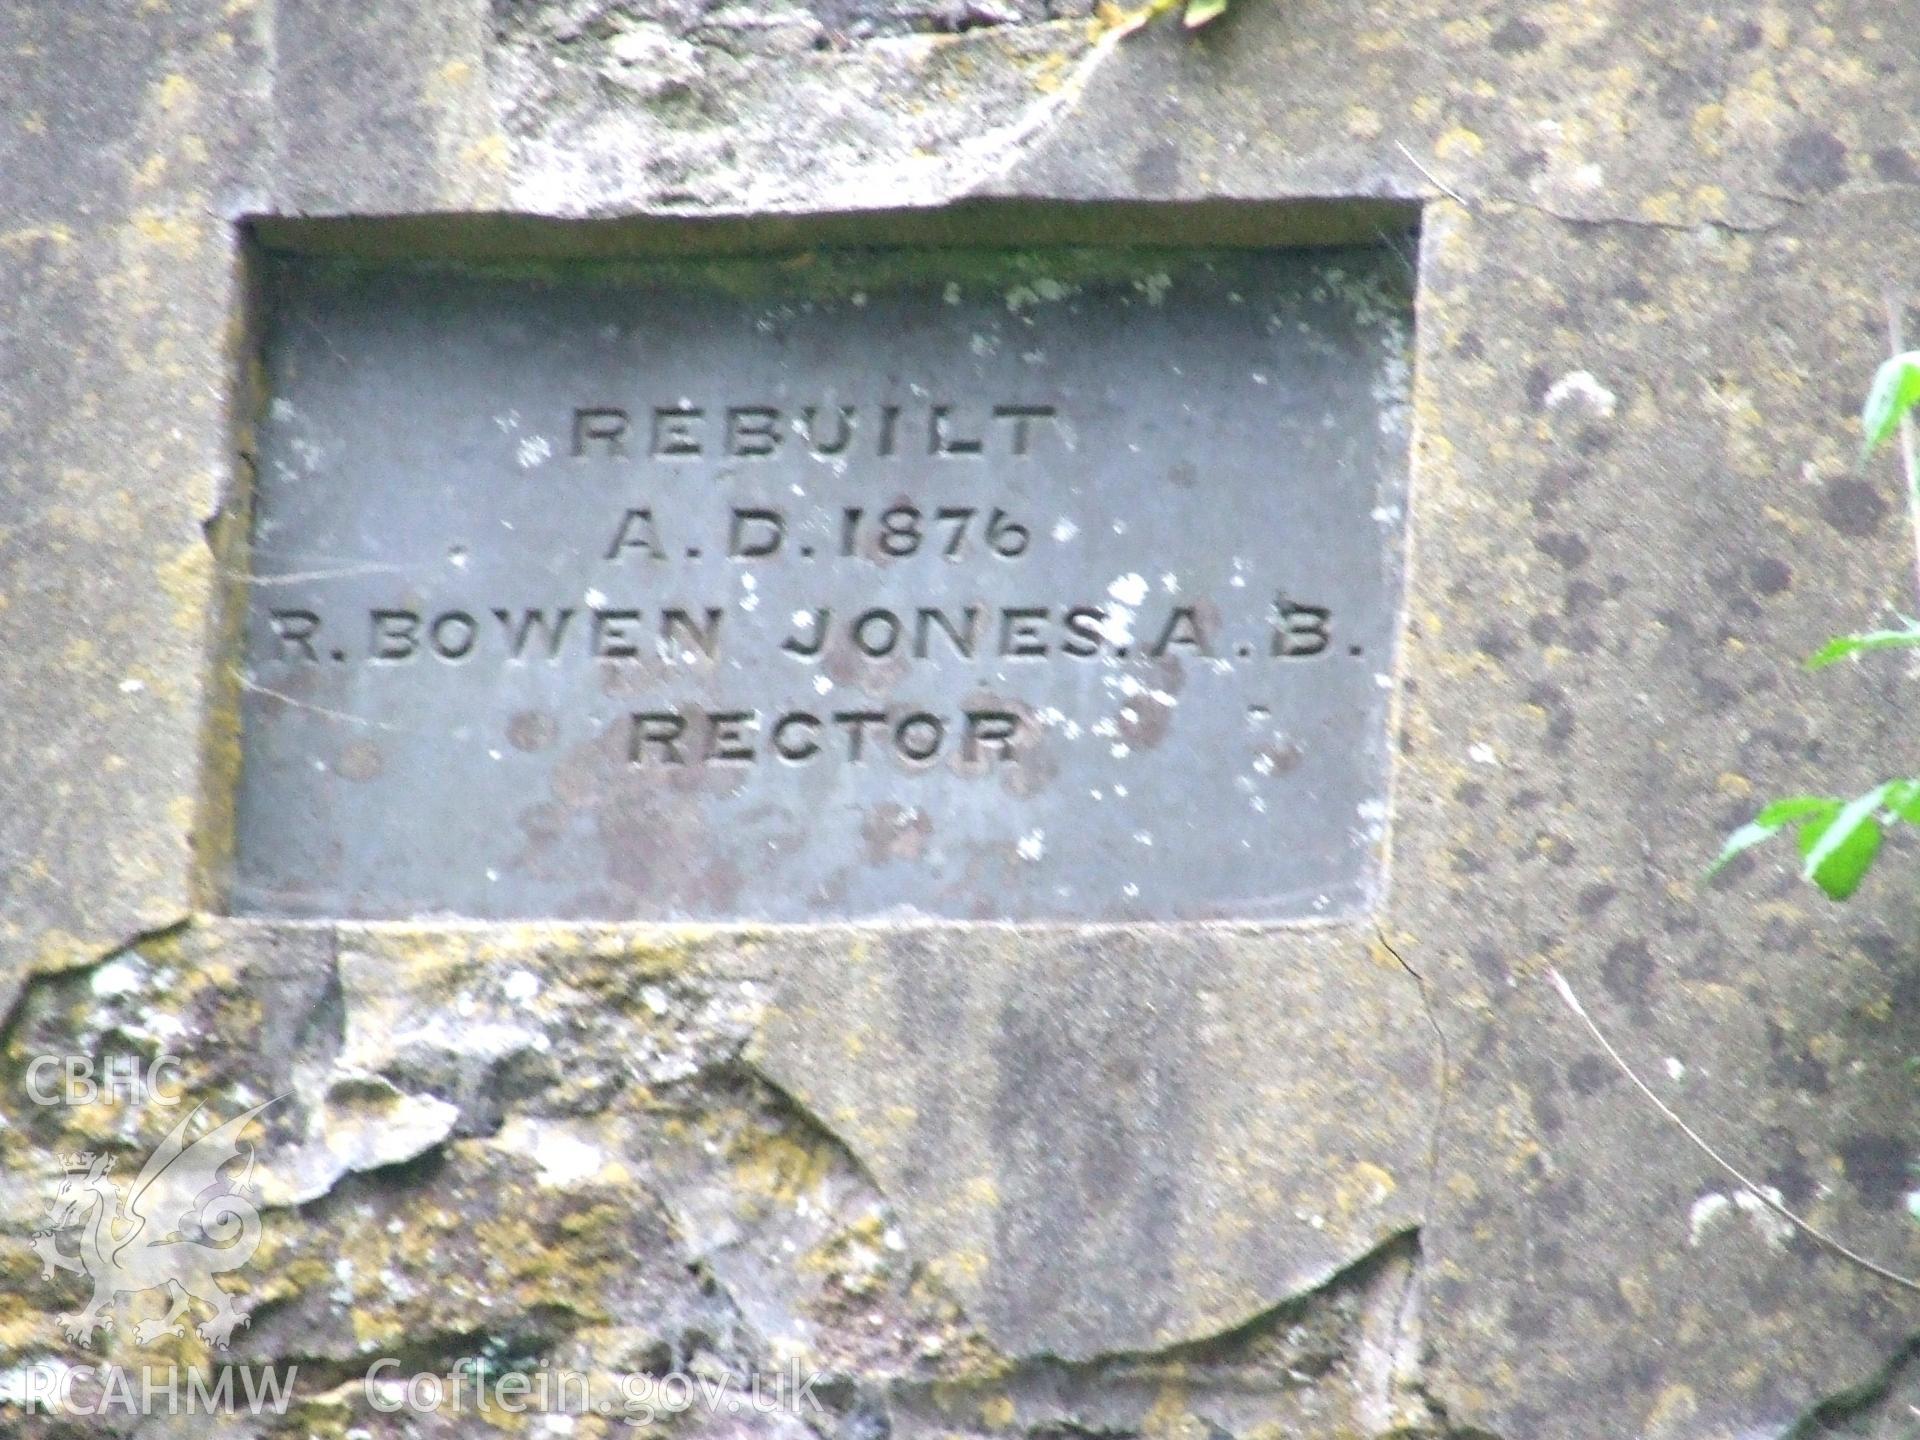 Digital colour photograph showing exterior - plaque, at Castell Dwyran church.